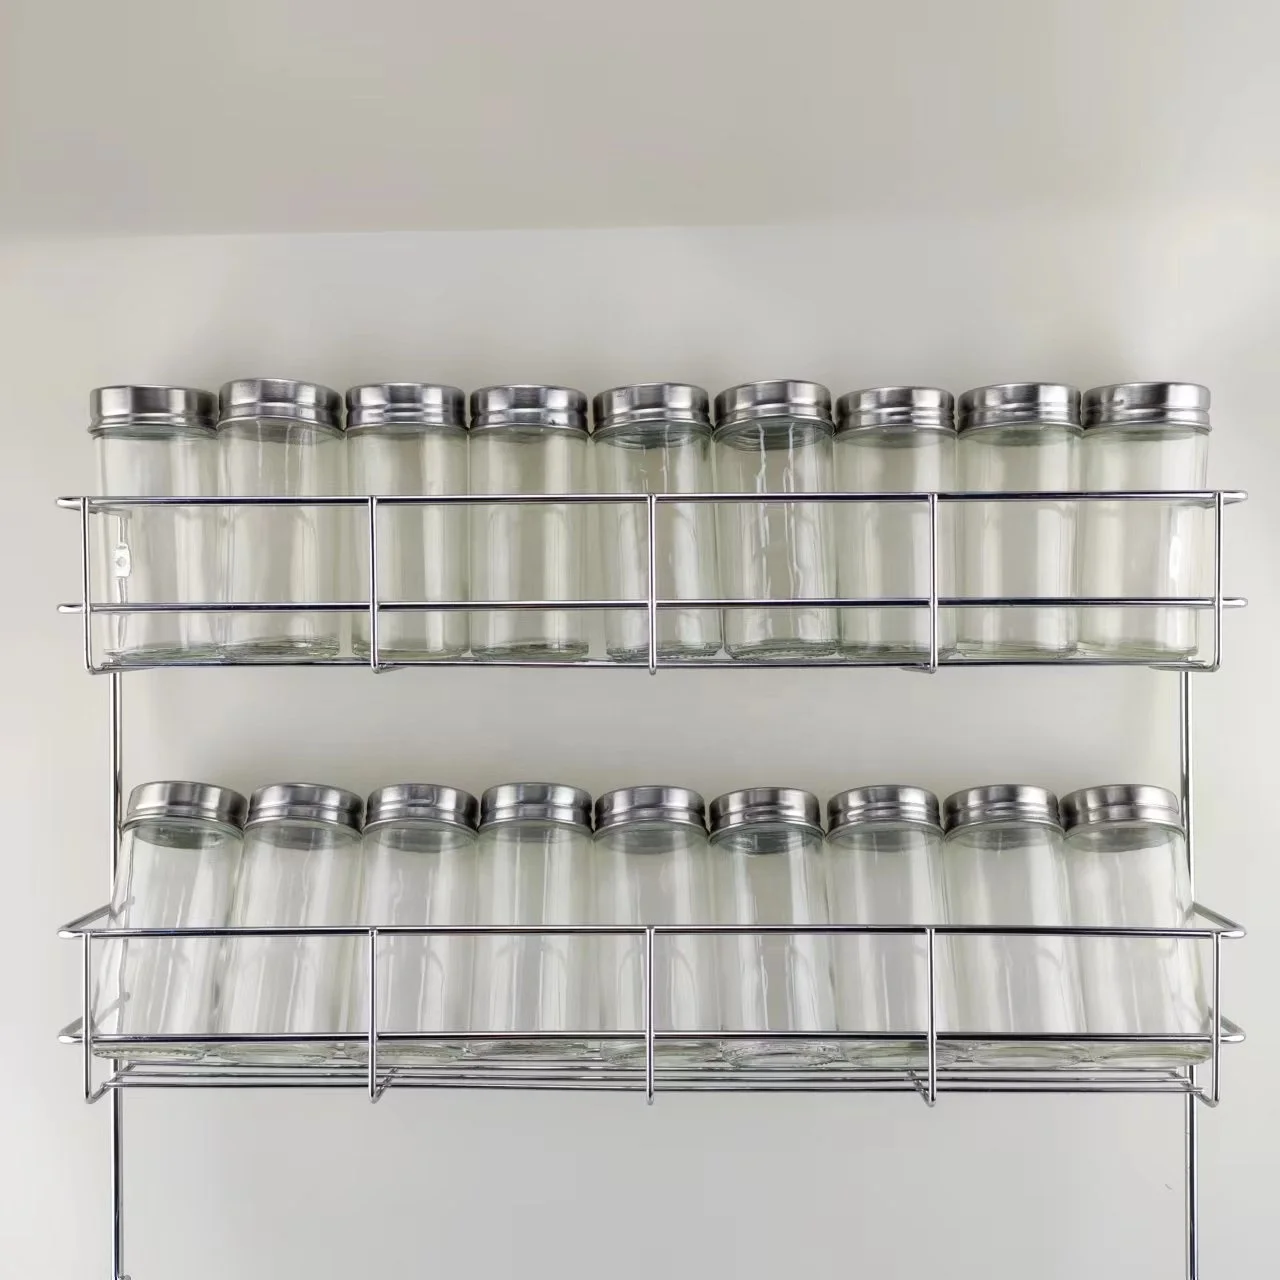 4 Tier Spice Rack Organizer Chalk Marker  for Cabinet, Countertop, Pantry, Cupboard or Door & Wall Mount